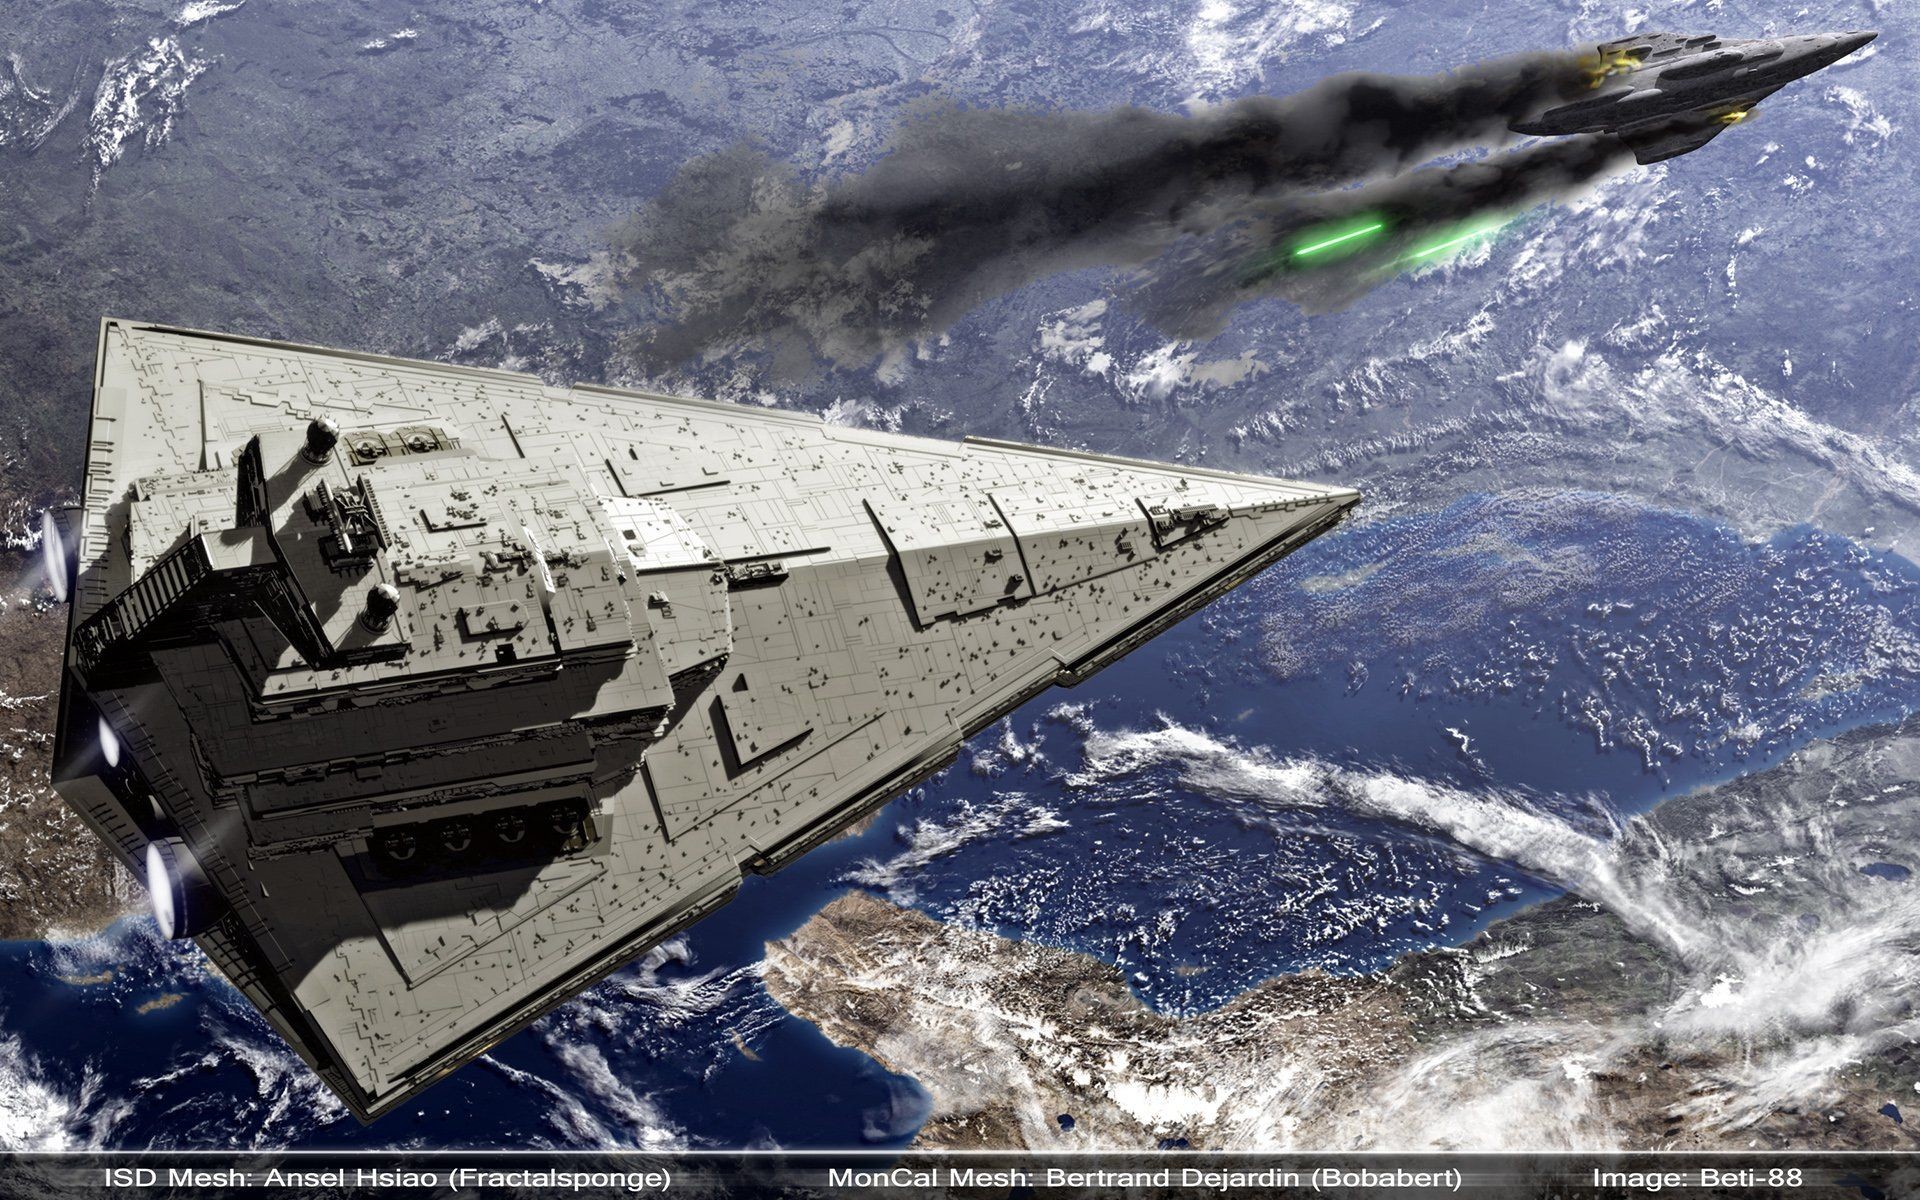 star wars imperial fleet wallpaper